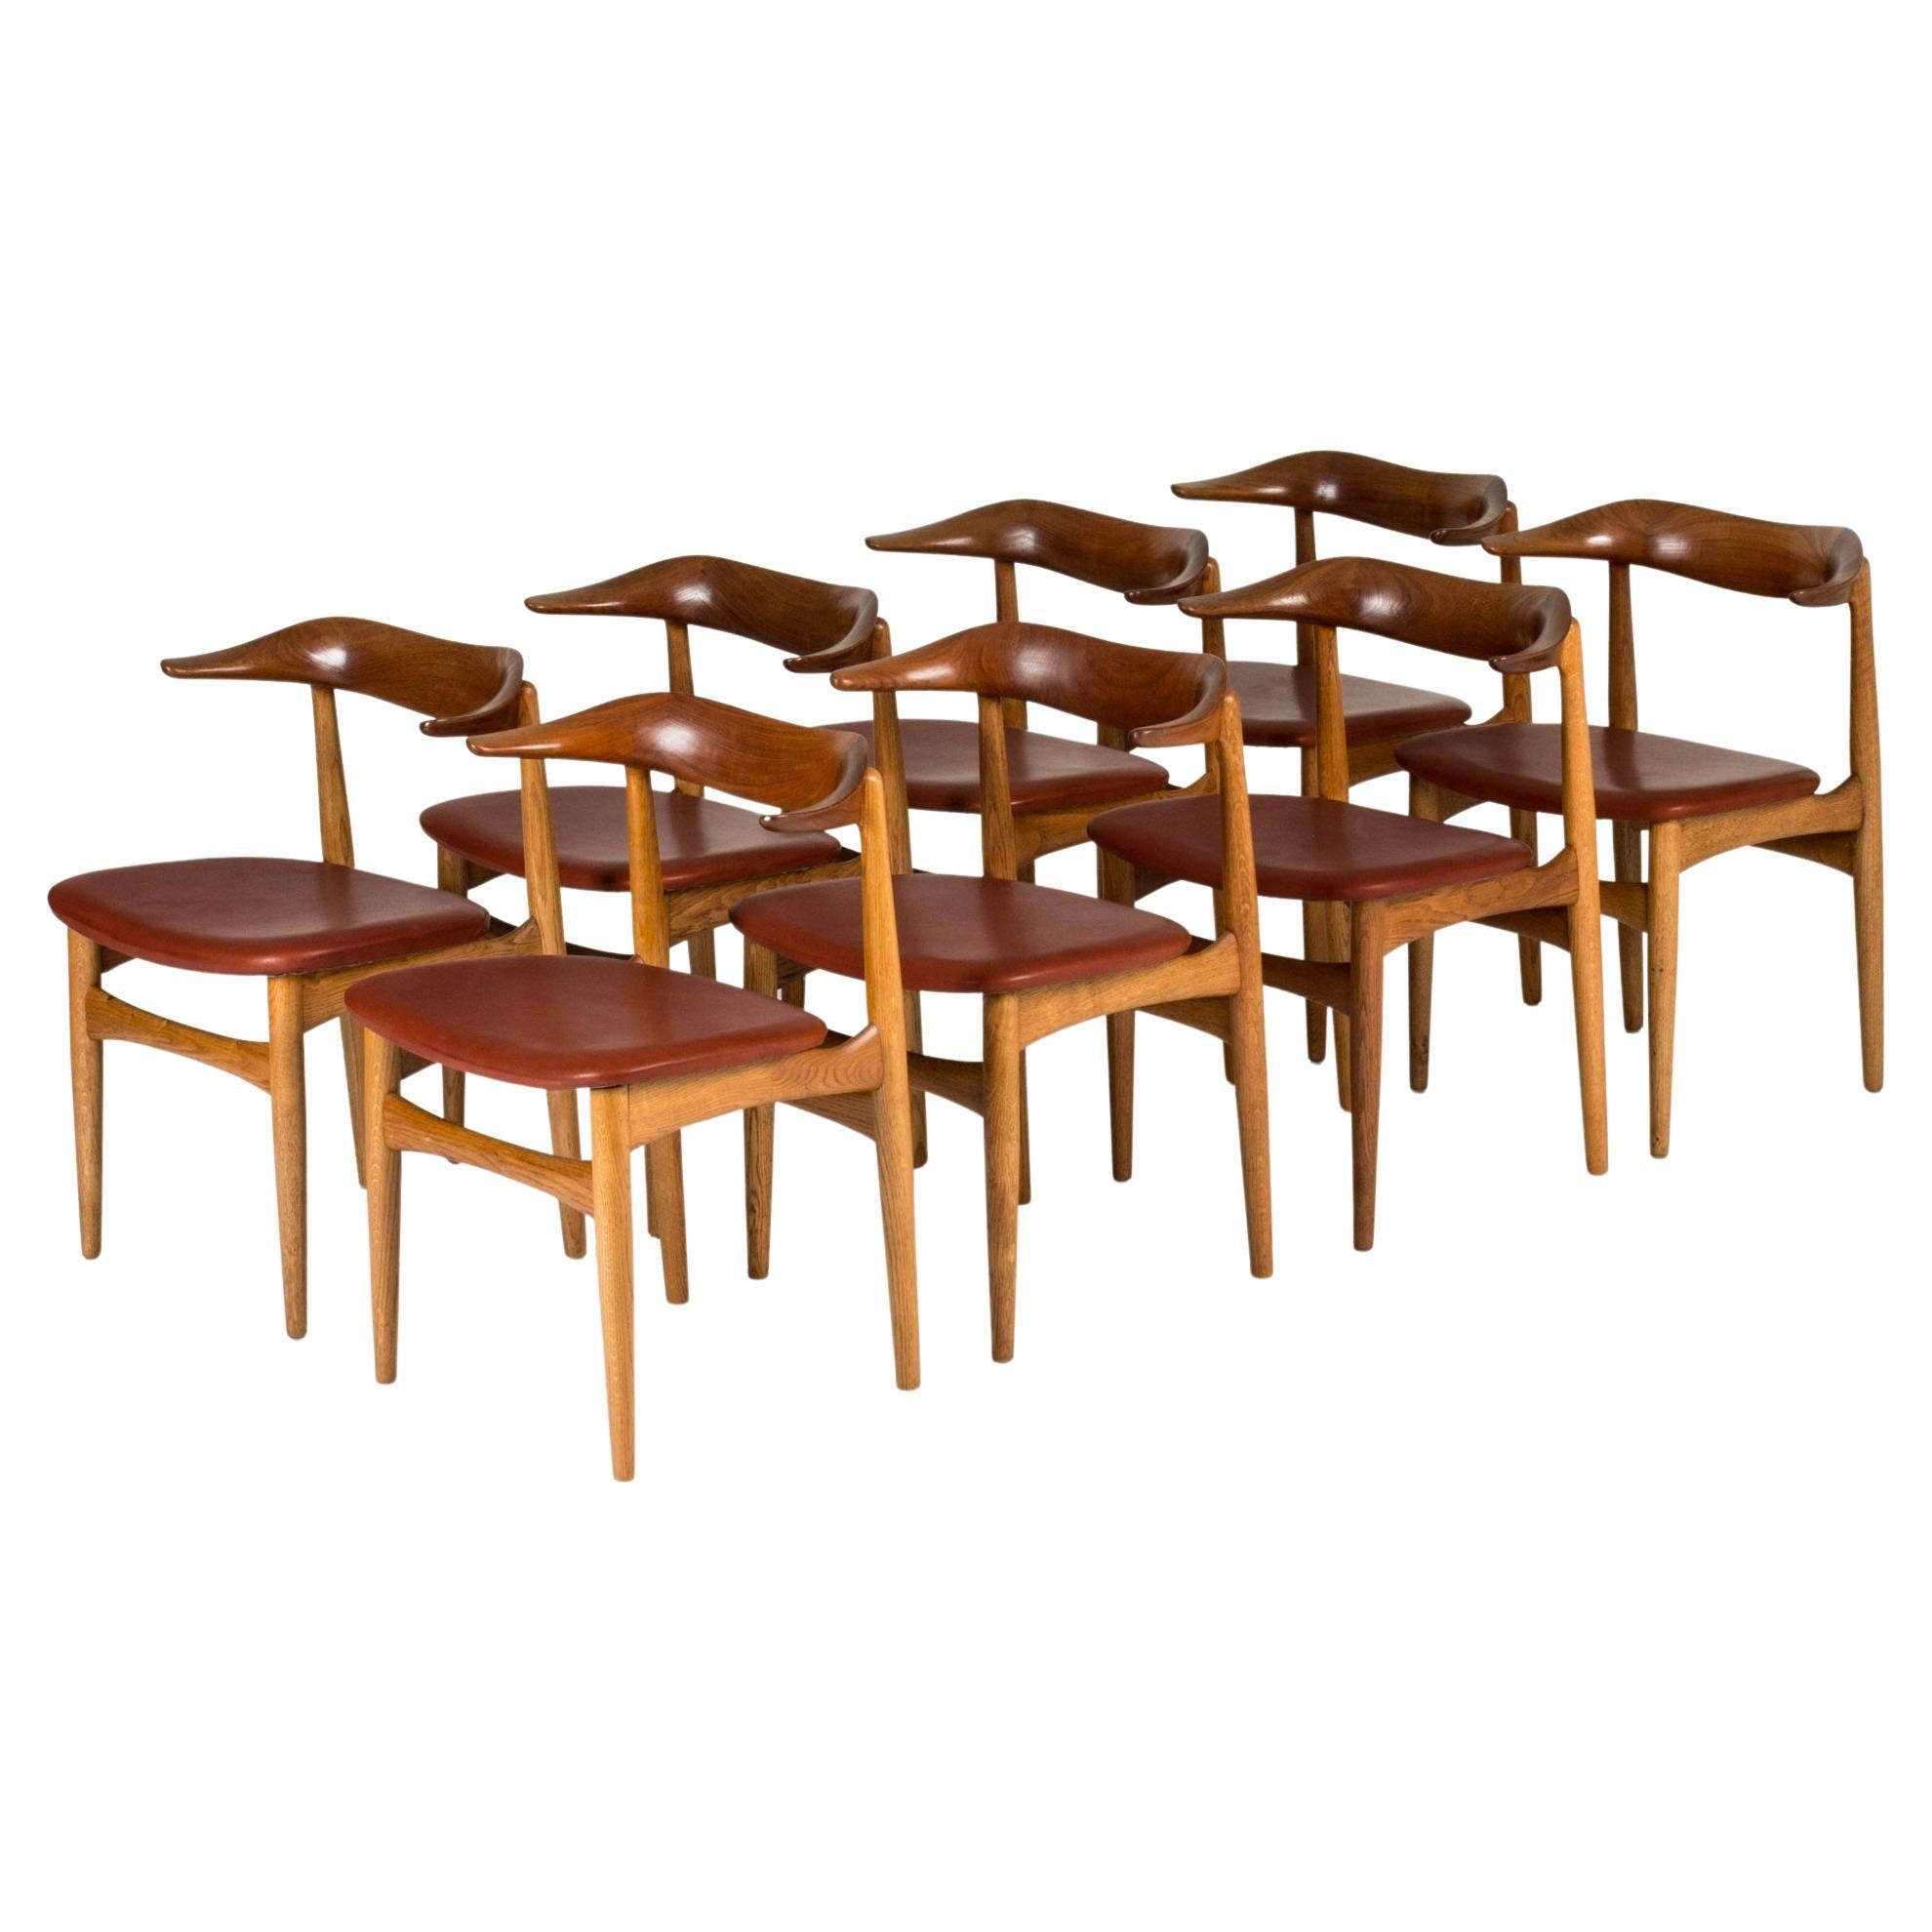 "Cowhorn" Dining Chairs by Knud Færch for Slagelse Møbelværk, Denmark, 1950s For Sale